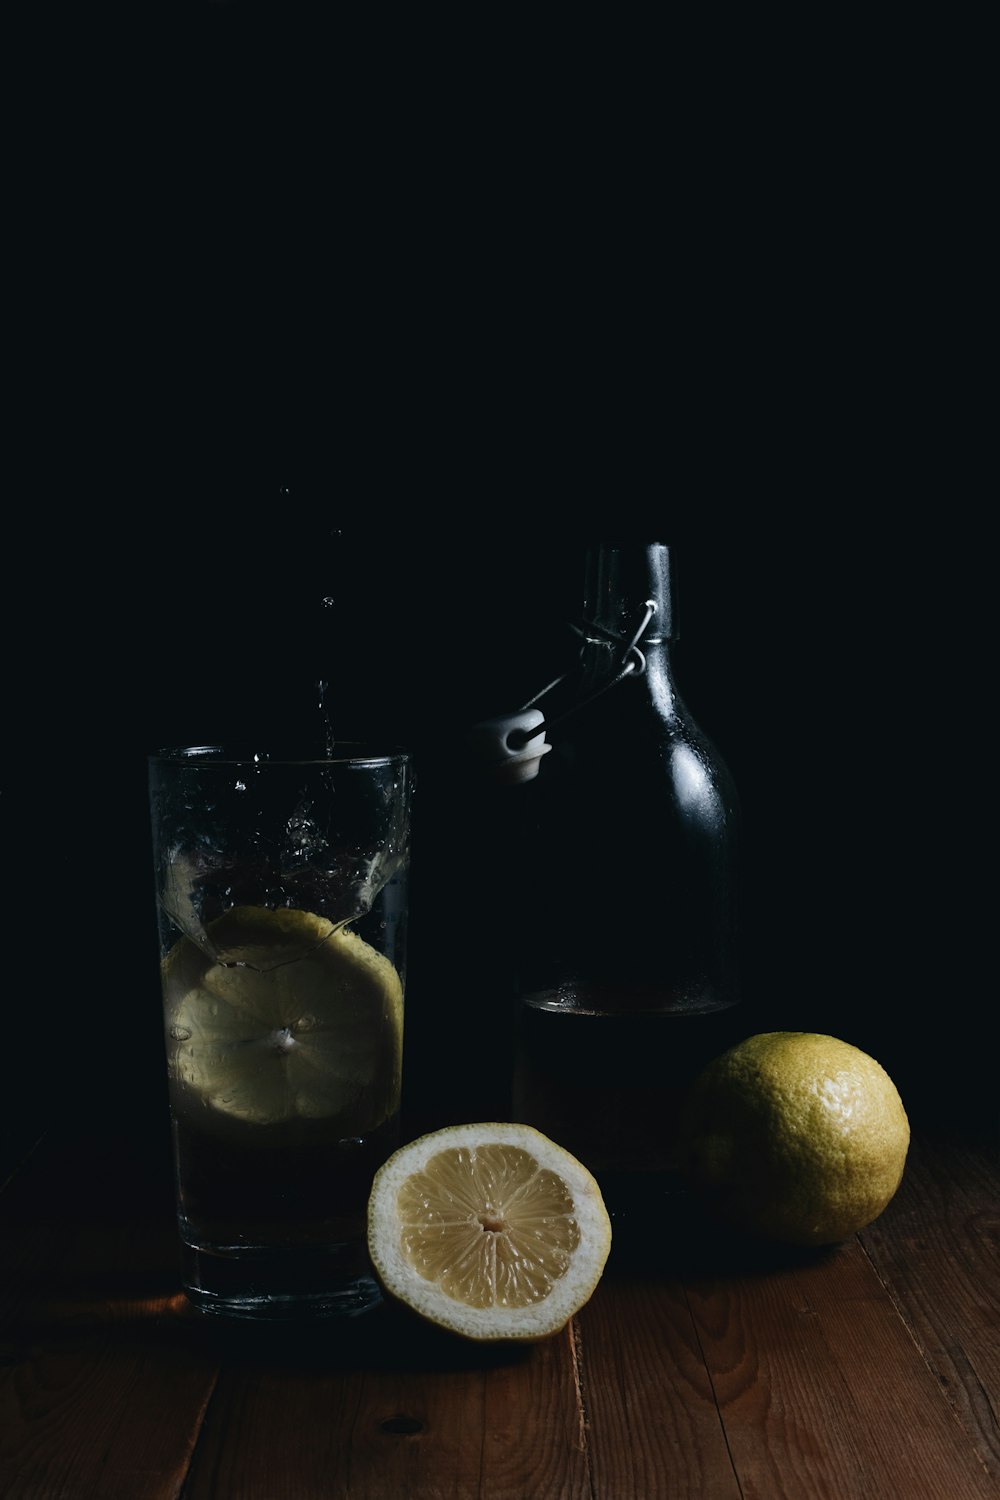 lemon on drinking glass